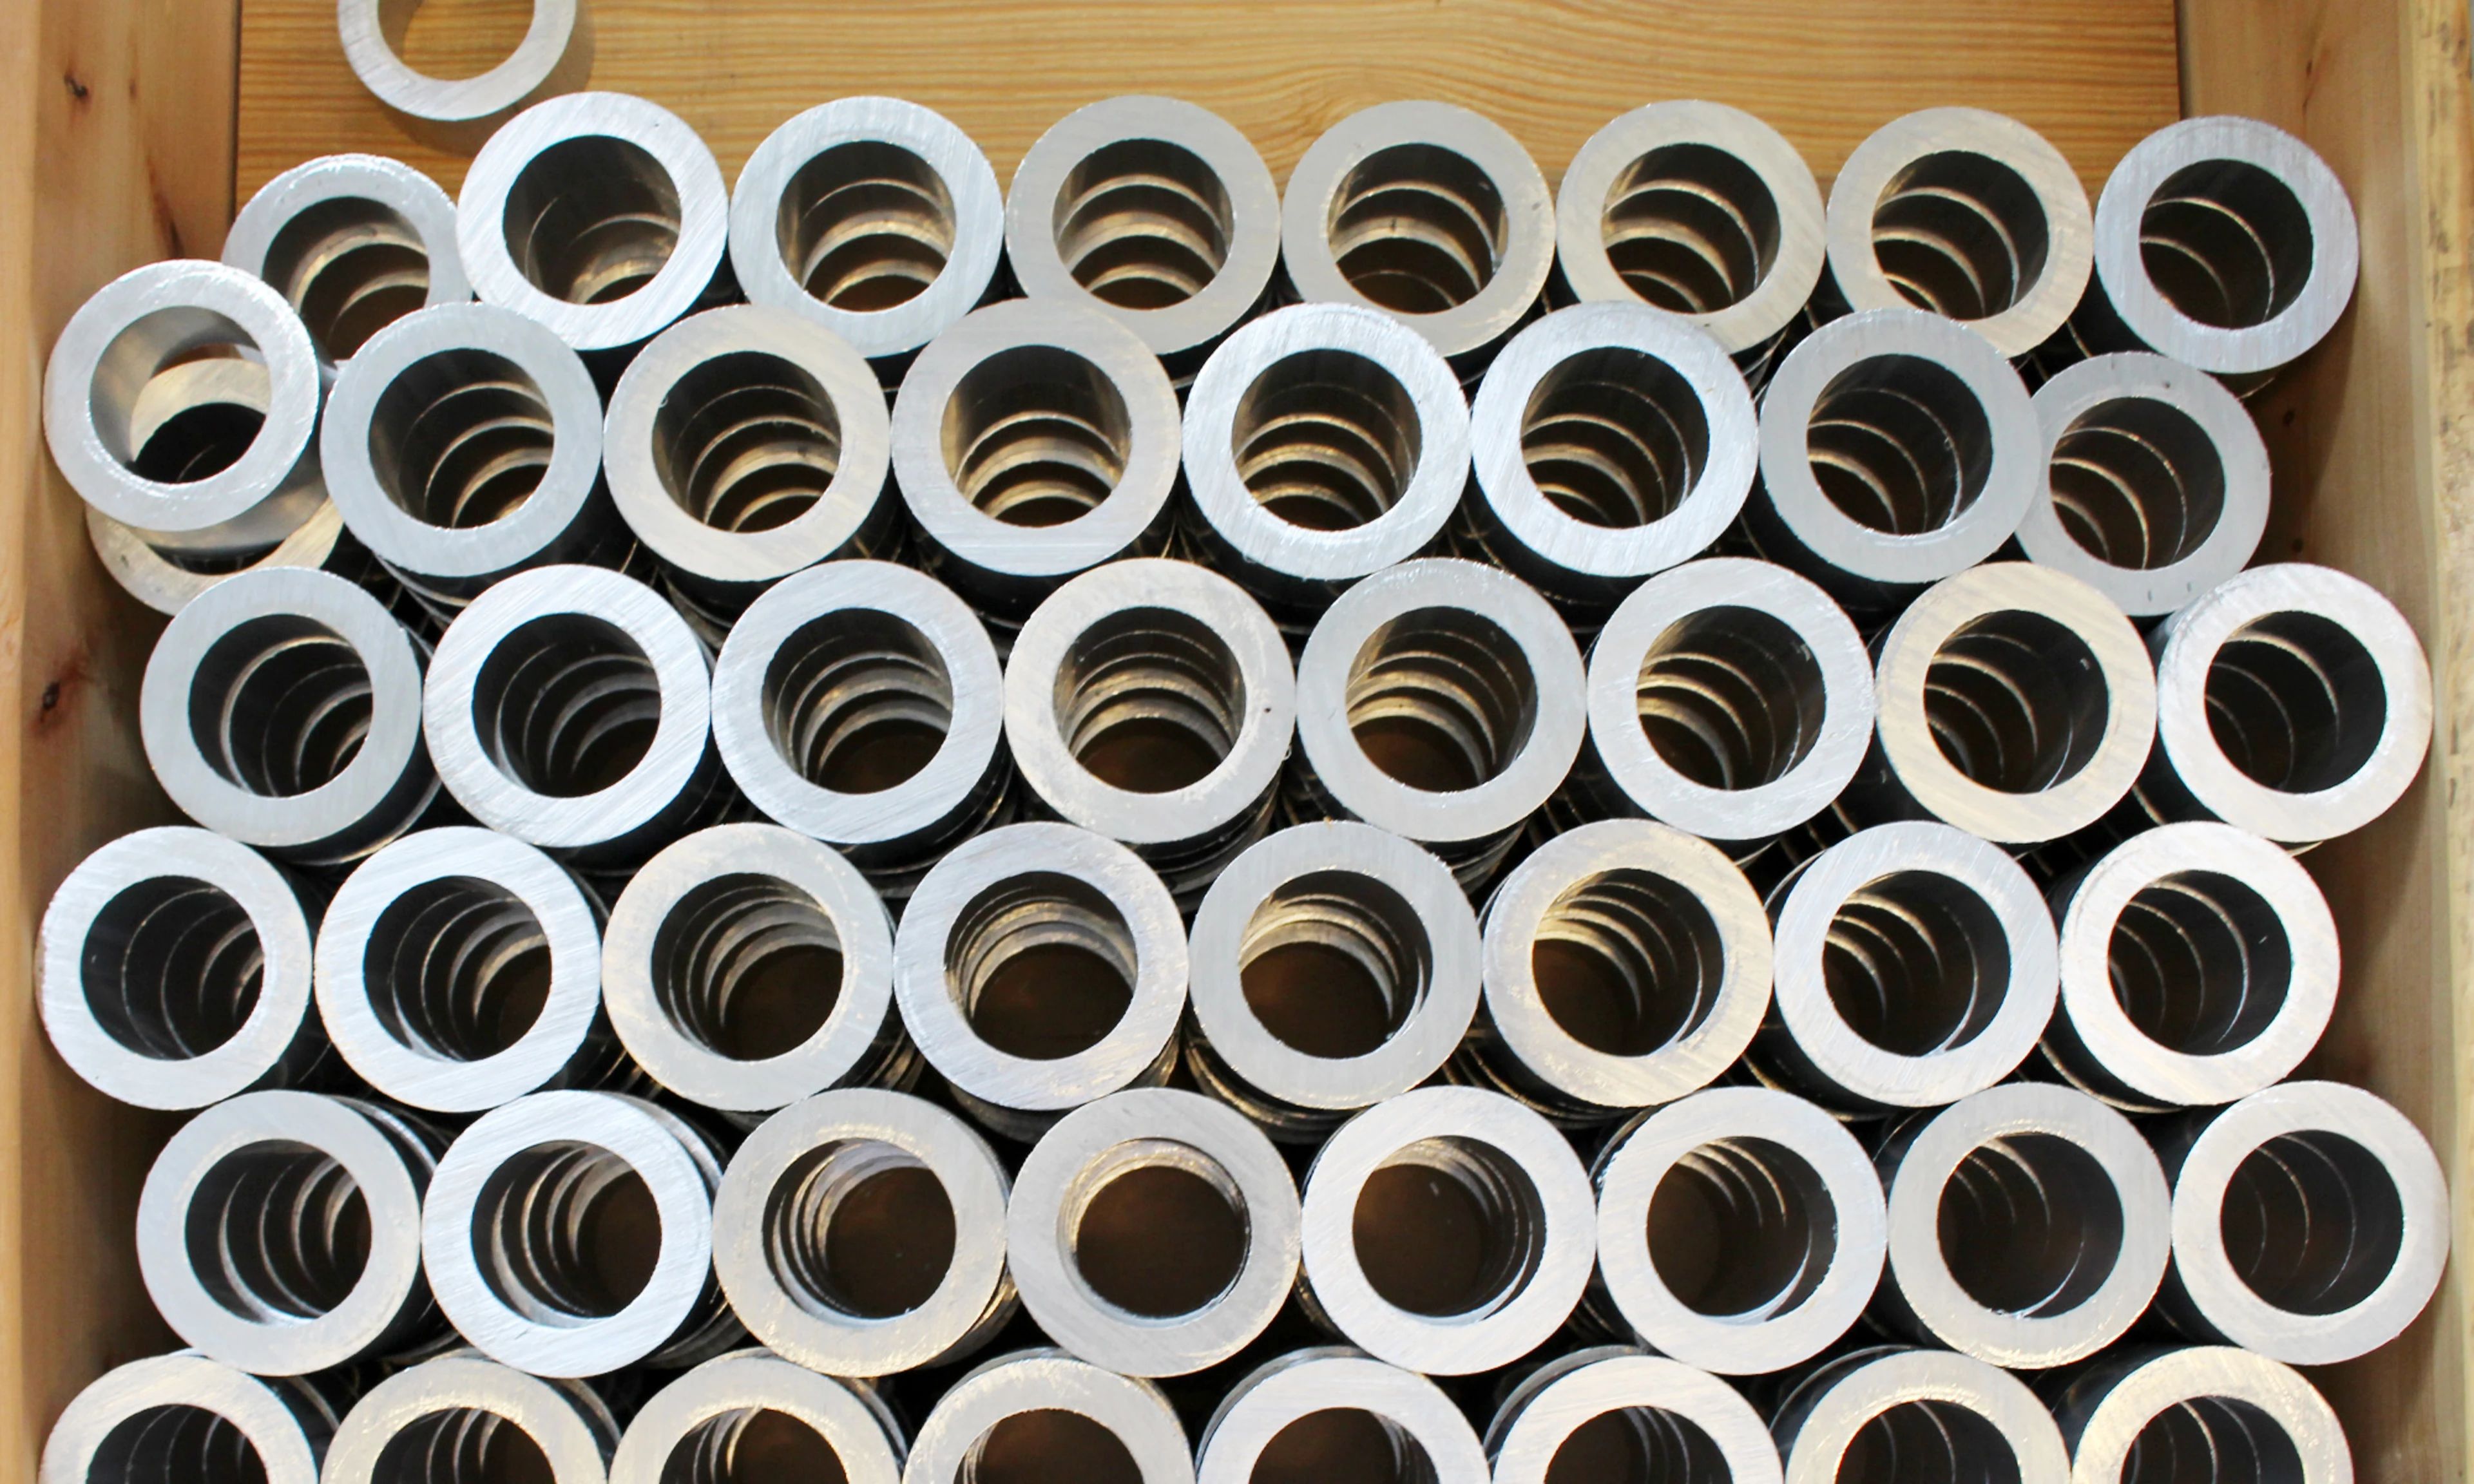 Cercles d’aluminium dans l’usine Bang & Olufsen de Struer au Danemark